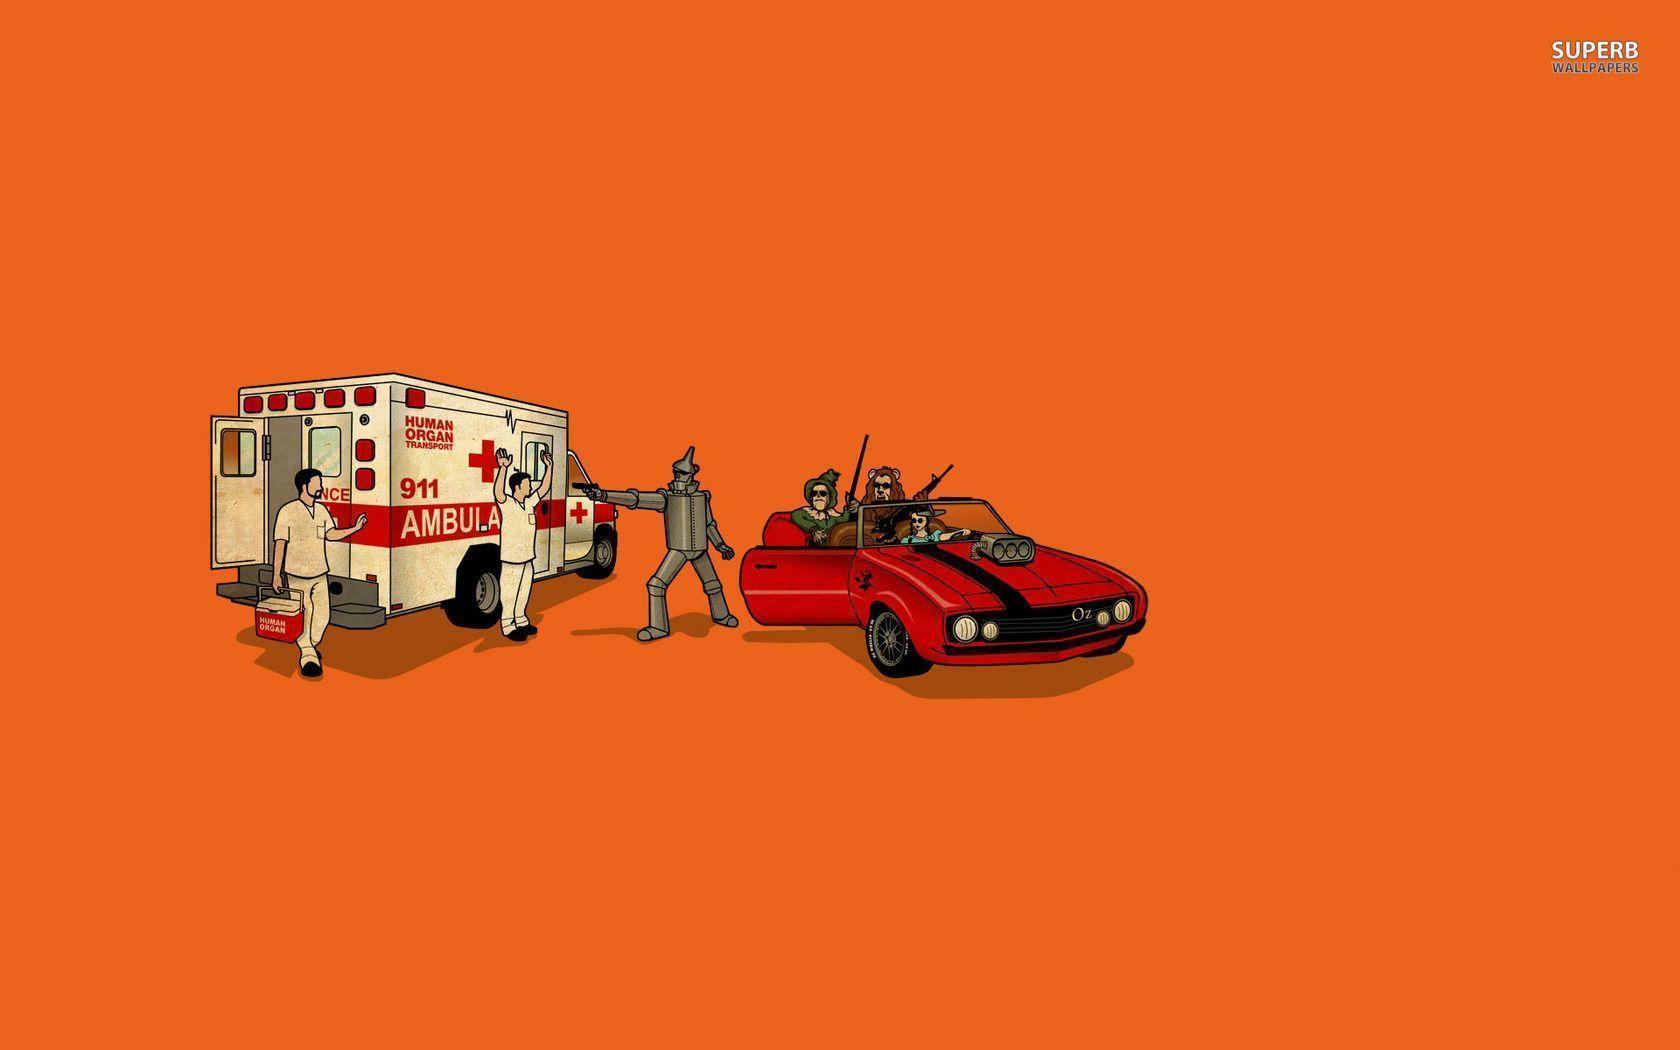 Wizard of Oz characters robbing the ambulance wallpaper